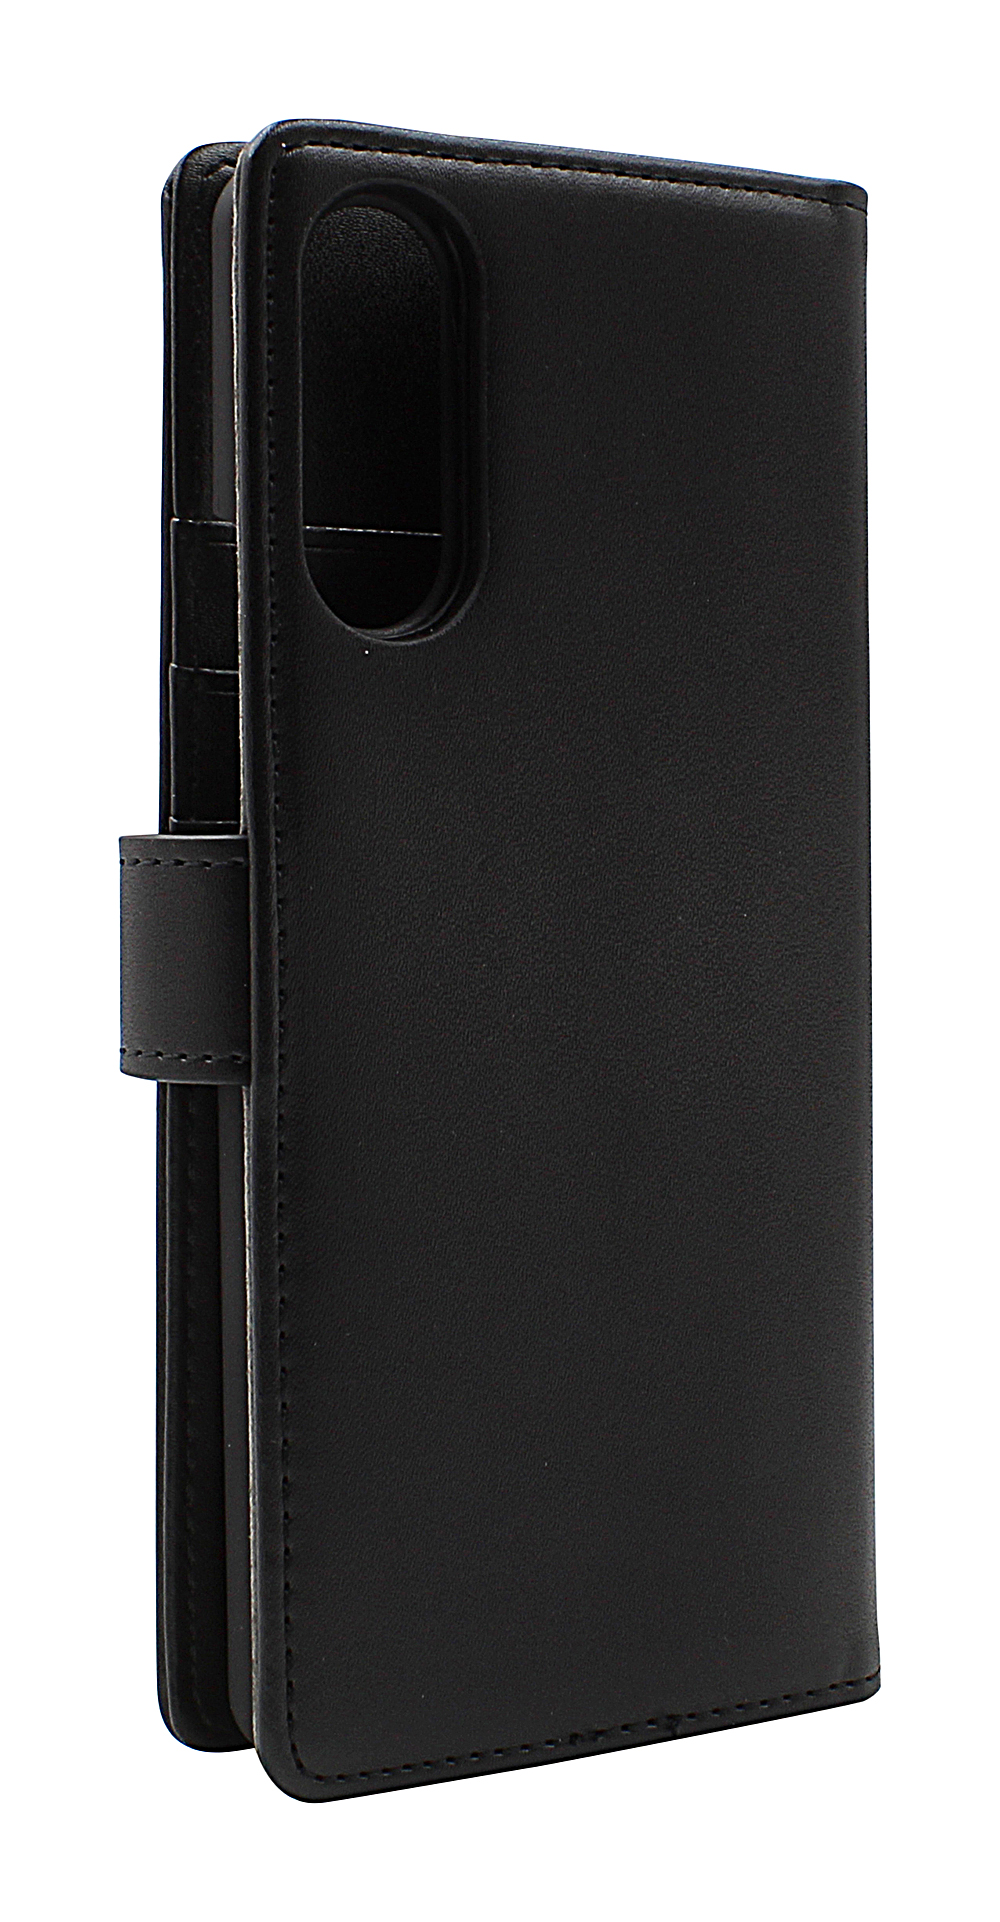 CoverIn Skimblocker Magneettikotelo Sony Xperia 10 II (XQ-AU51 / XQ-AU52)